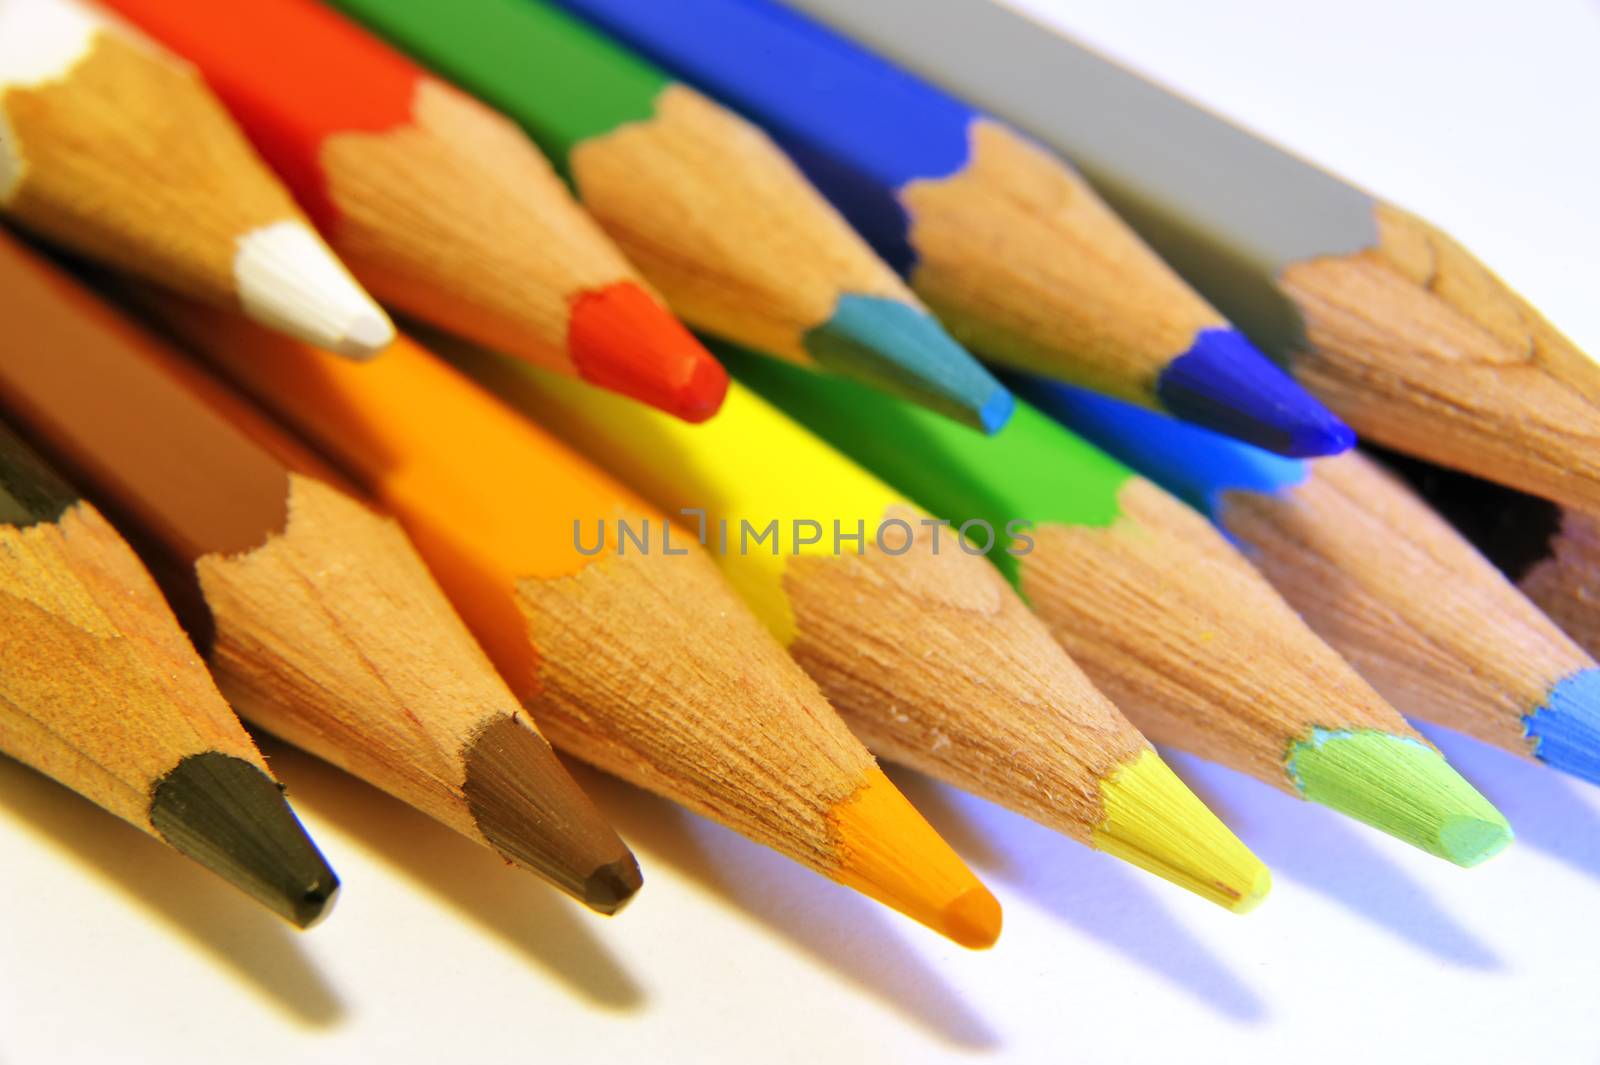 Color pencils by a40757